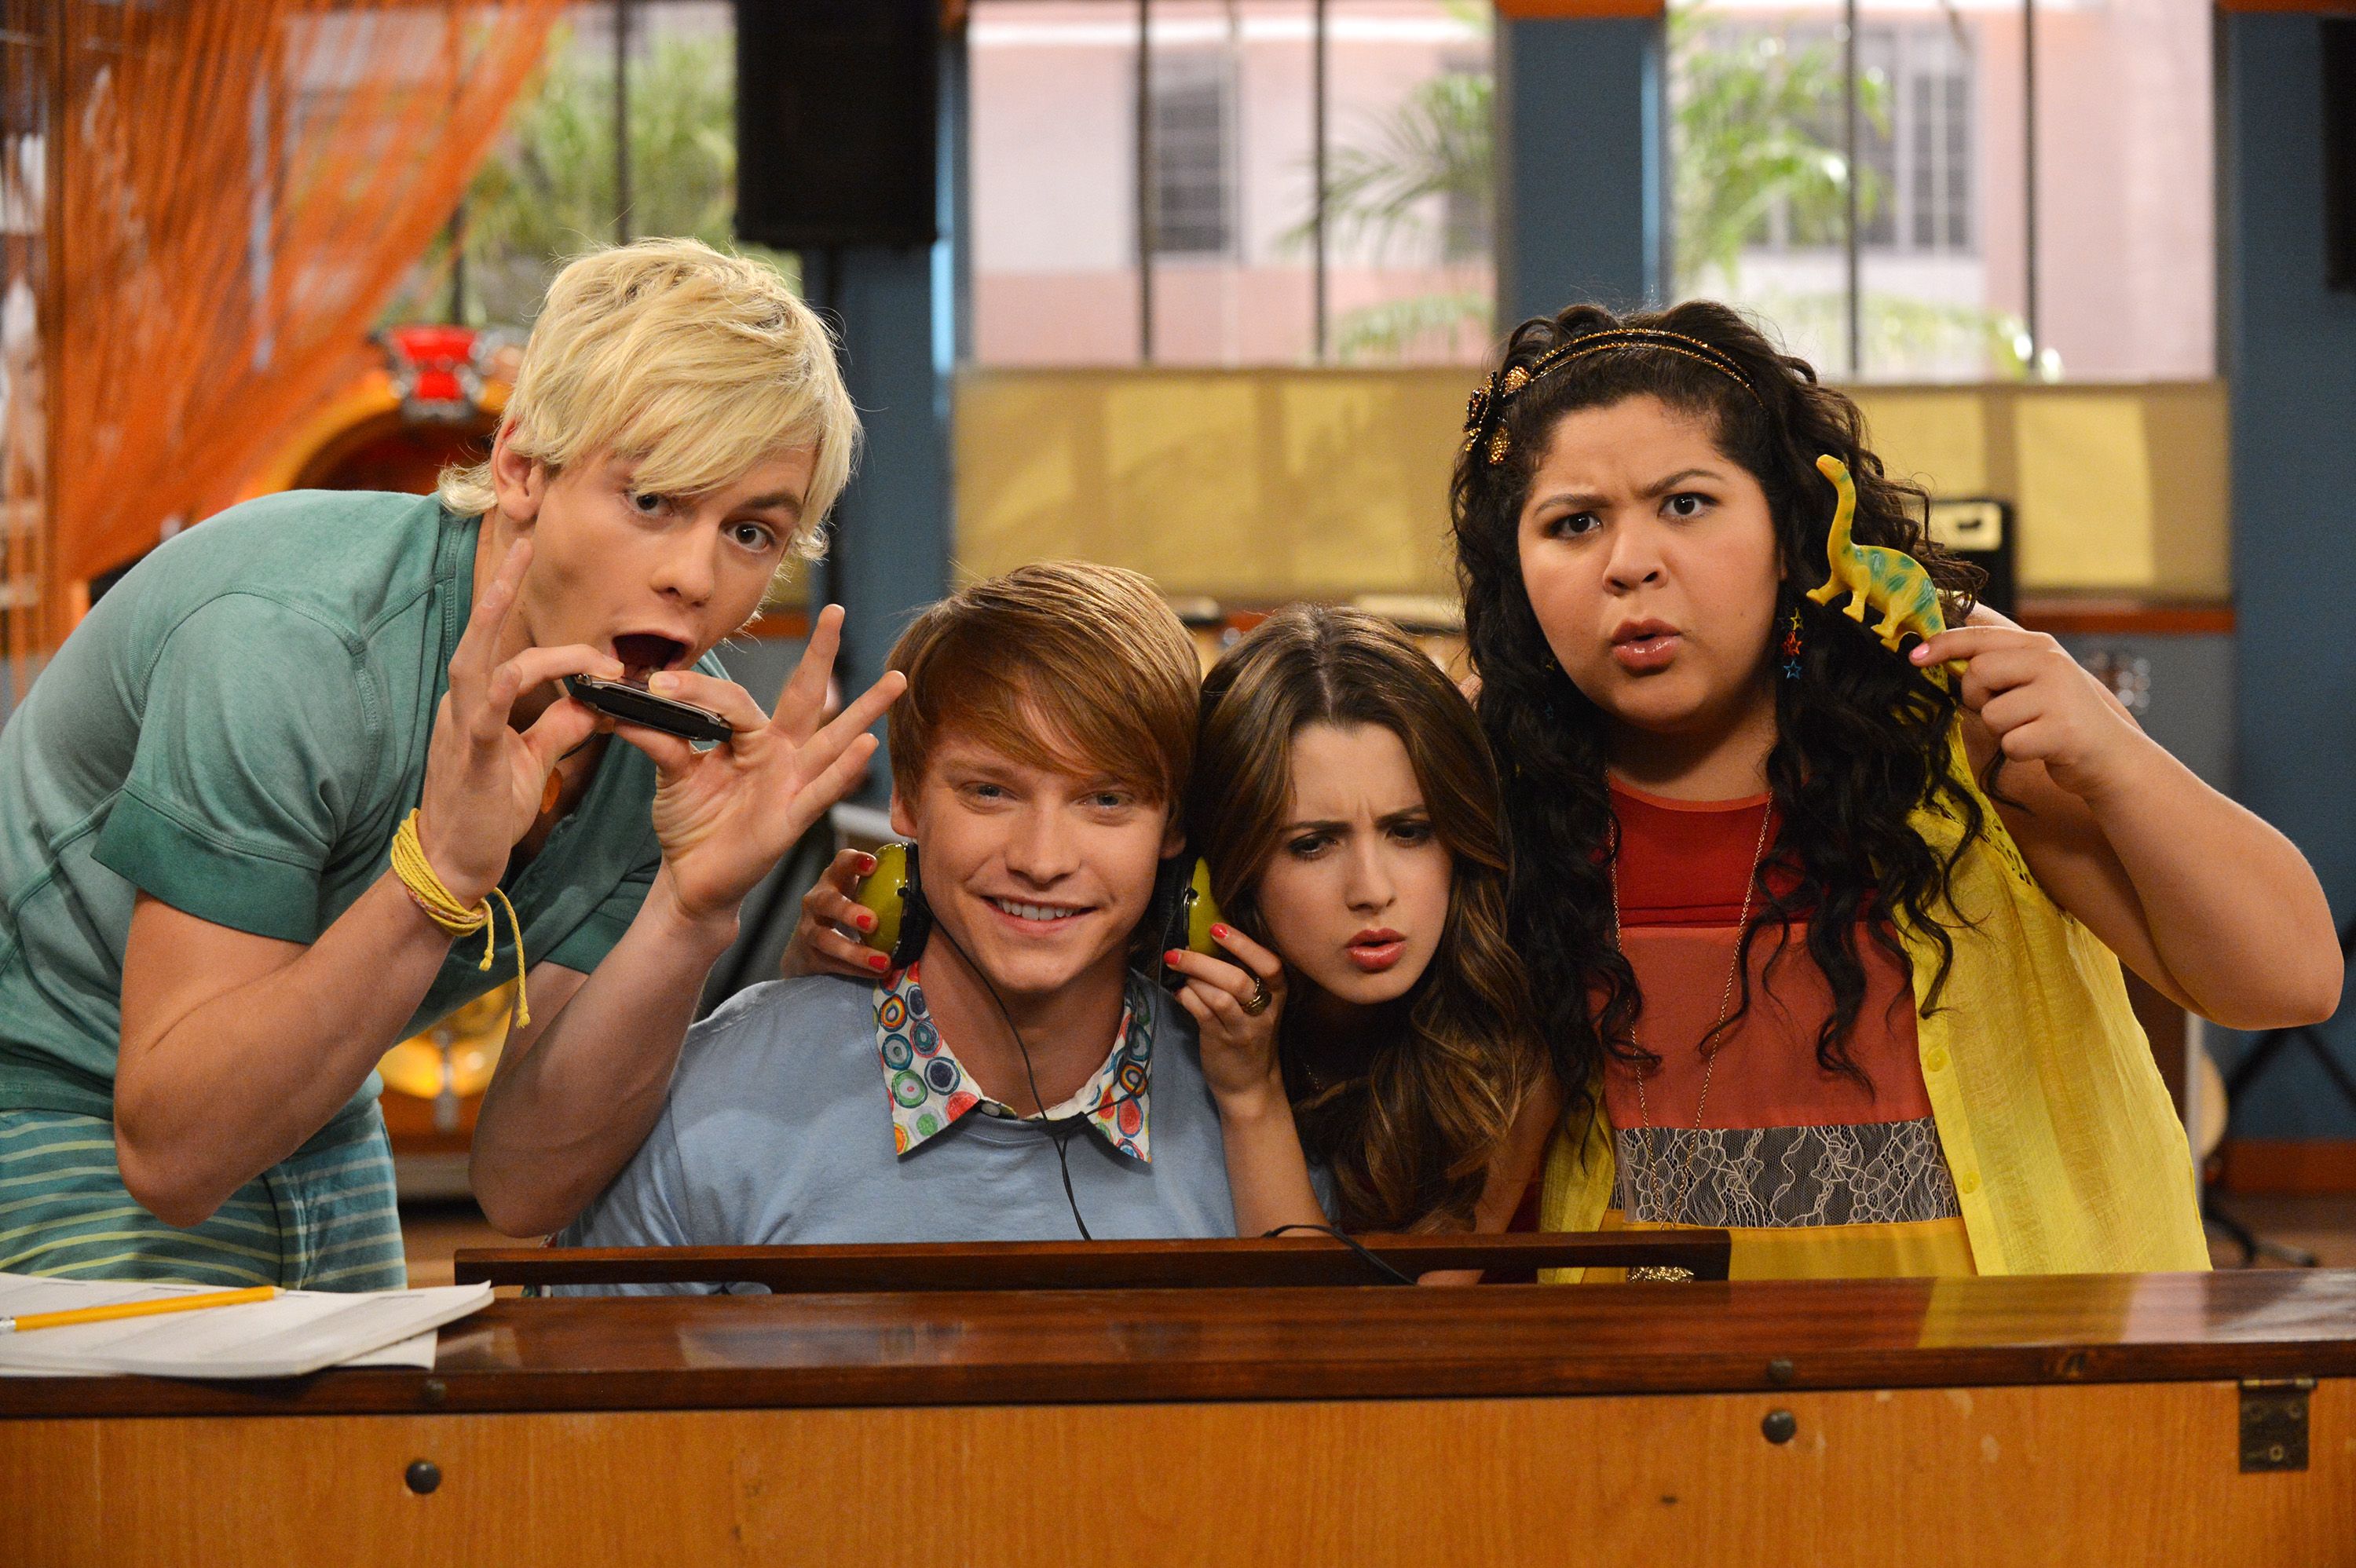 Austin & Ally renewed by Disney Channel